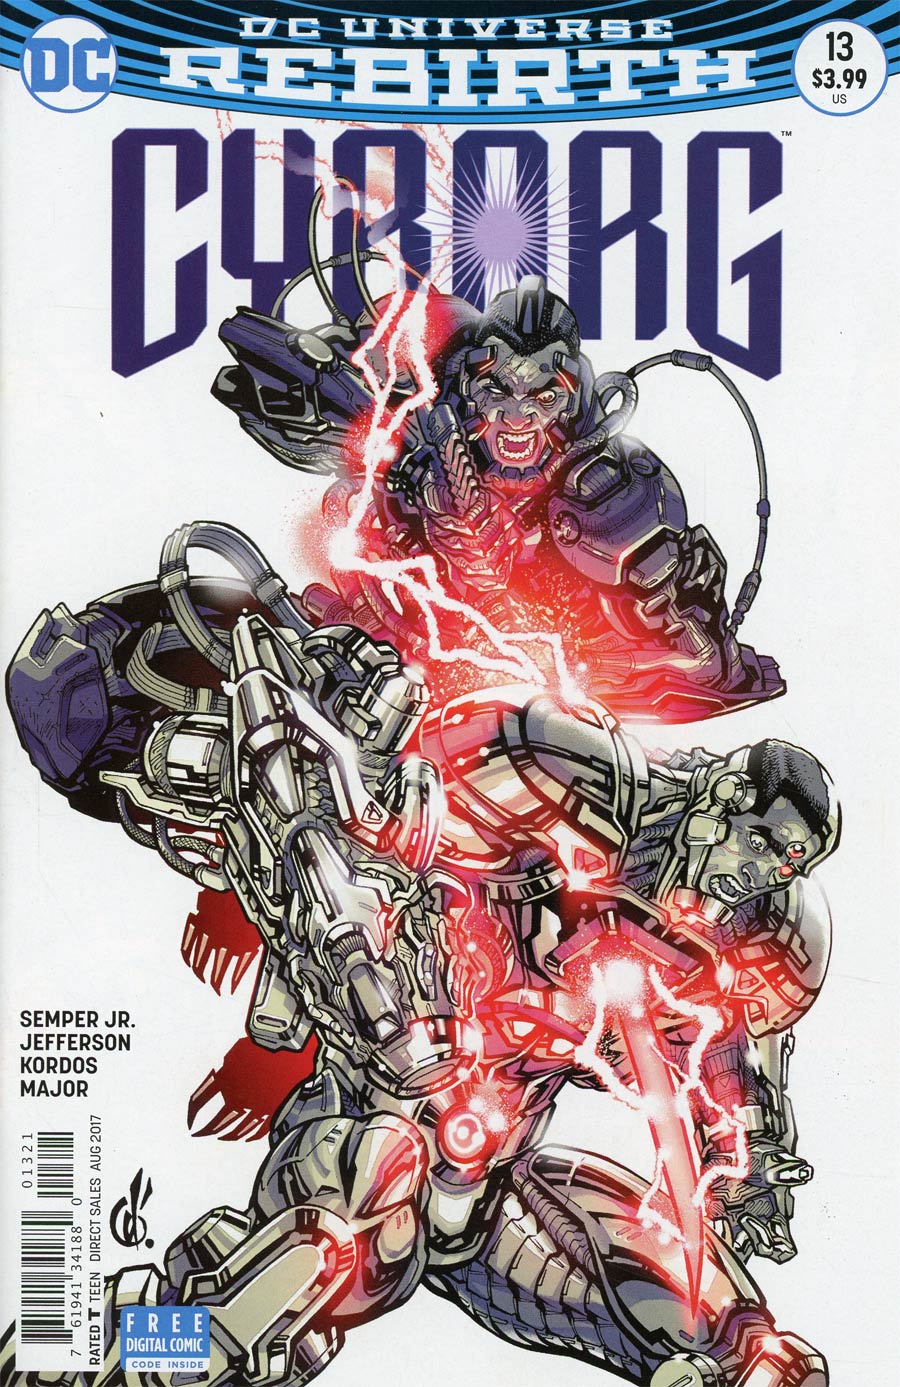 Cyborg Vol 2 #13 Cover B Variant Carlos DAnda Cover